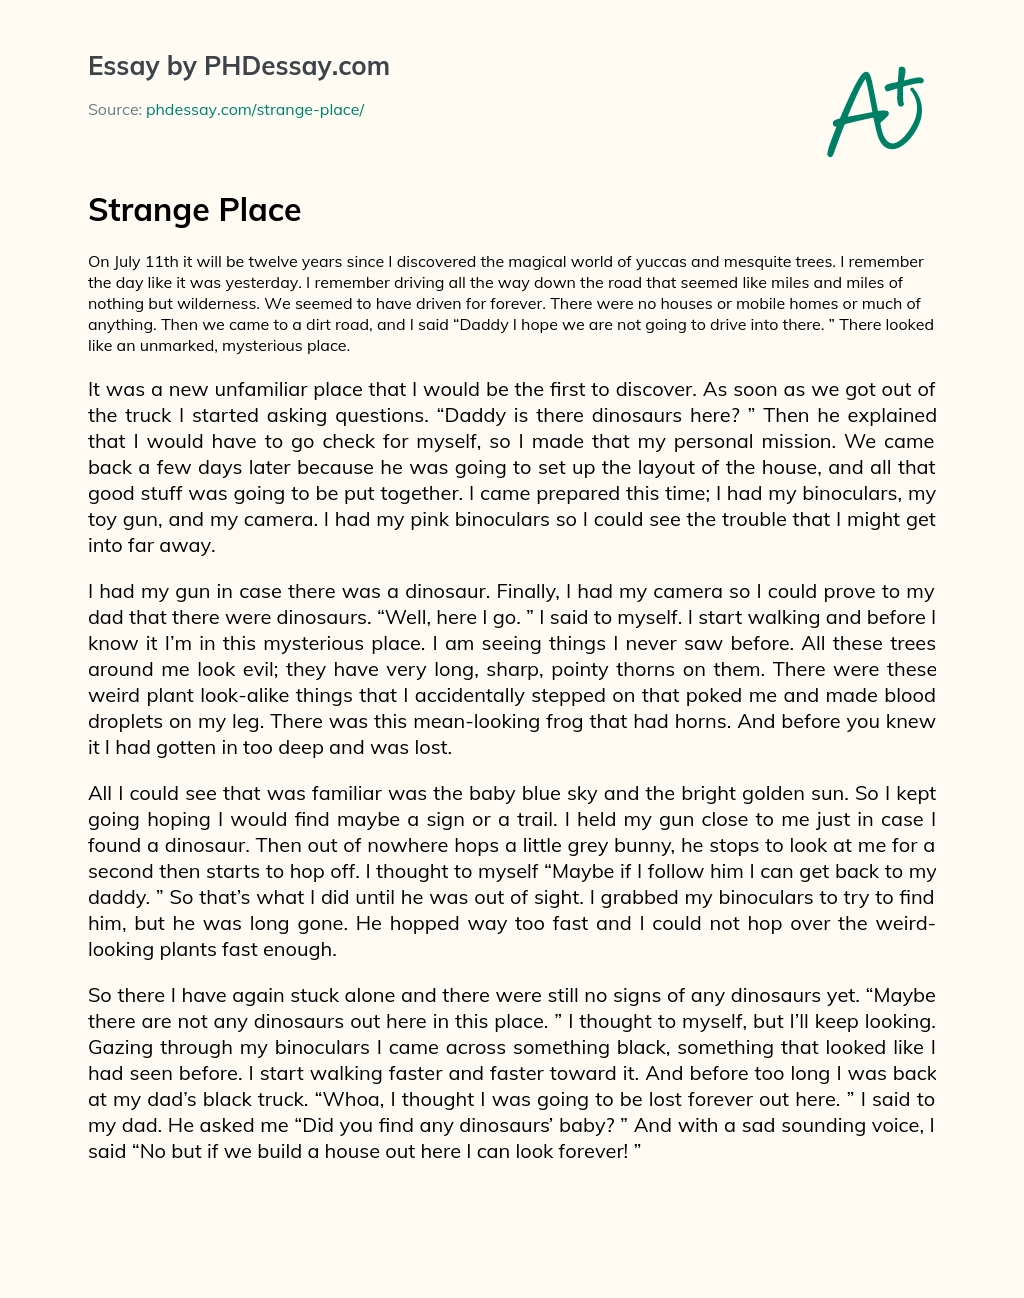 Strange Place essay